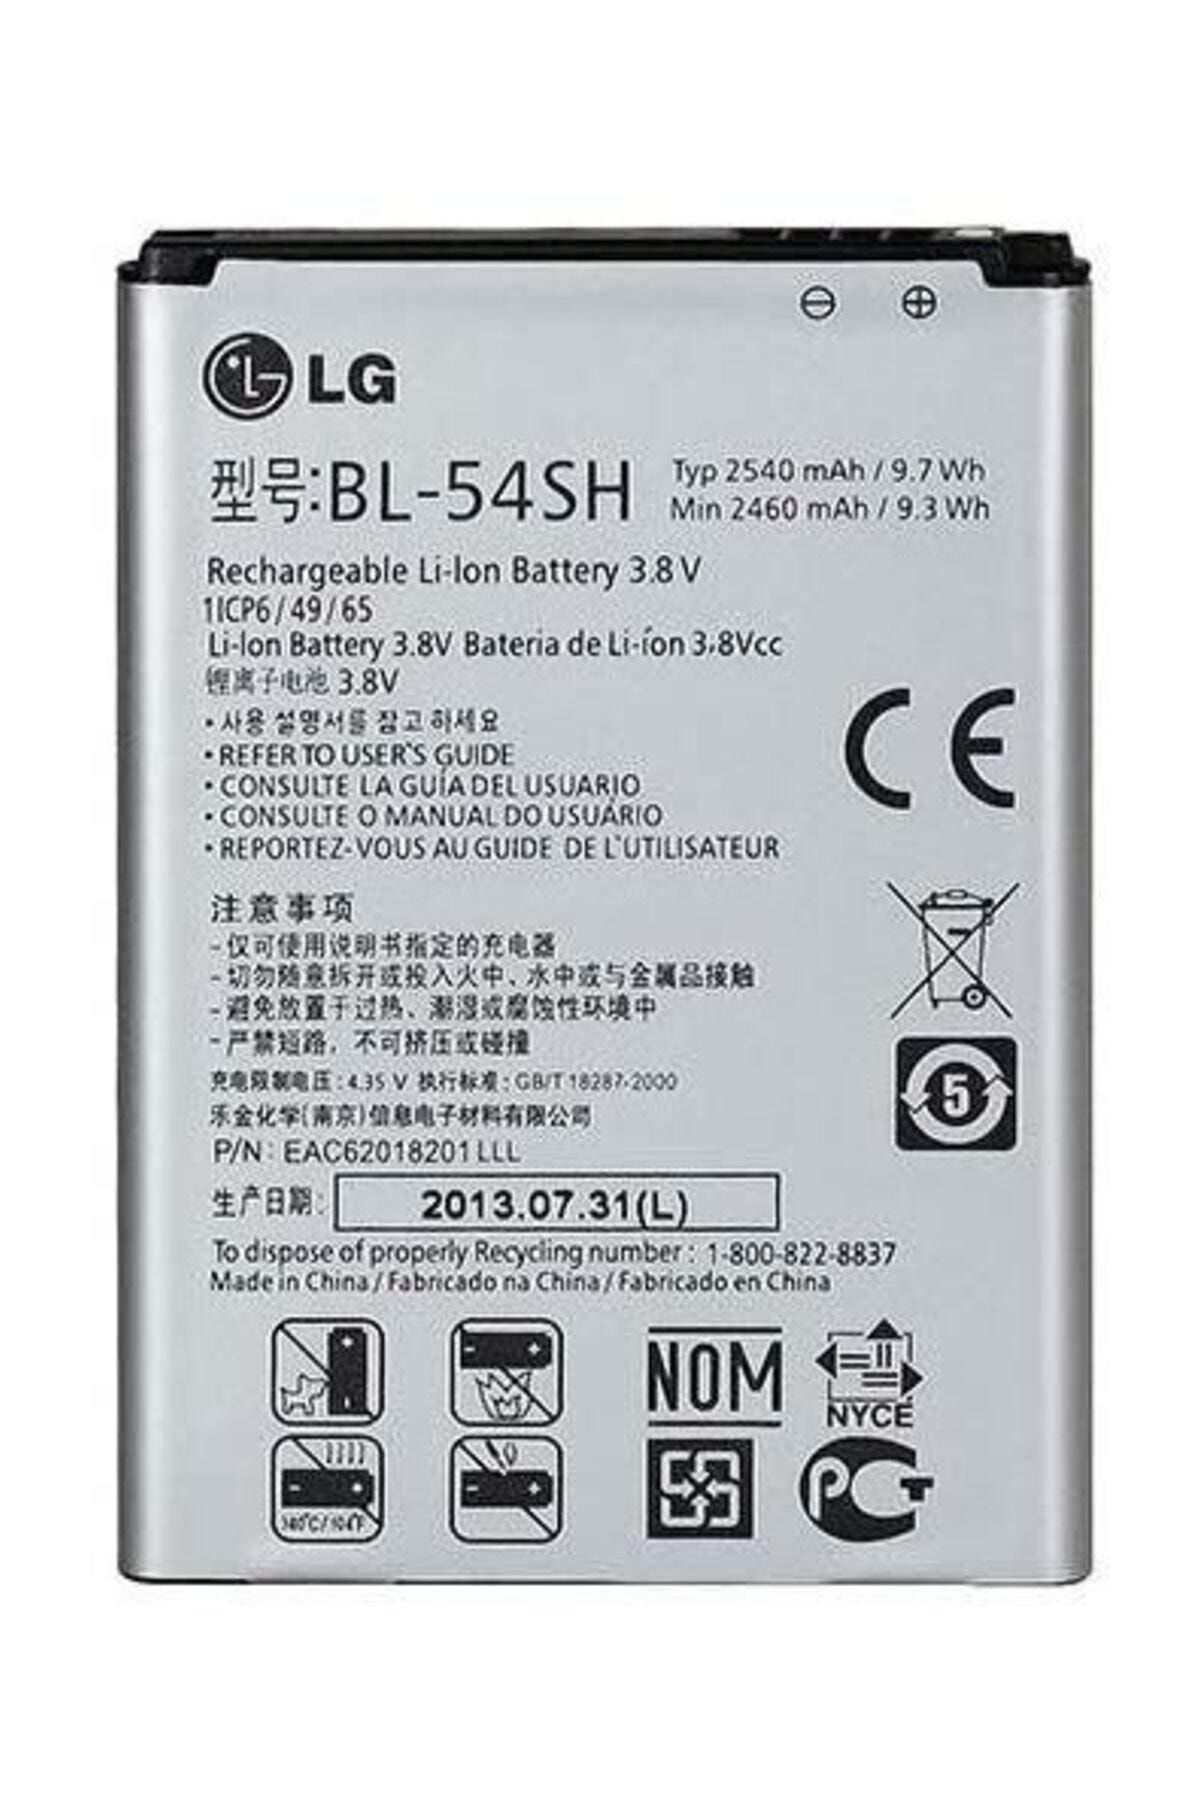 LG G3 Beat / Aka / L80 / Magna Bl-54sh Batarya Pil-ithalatçı Garantilidir